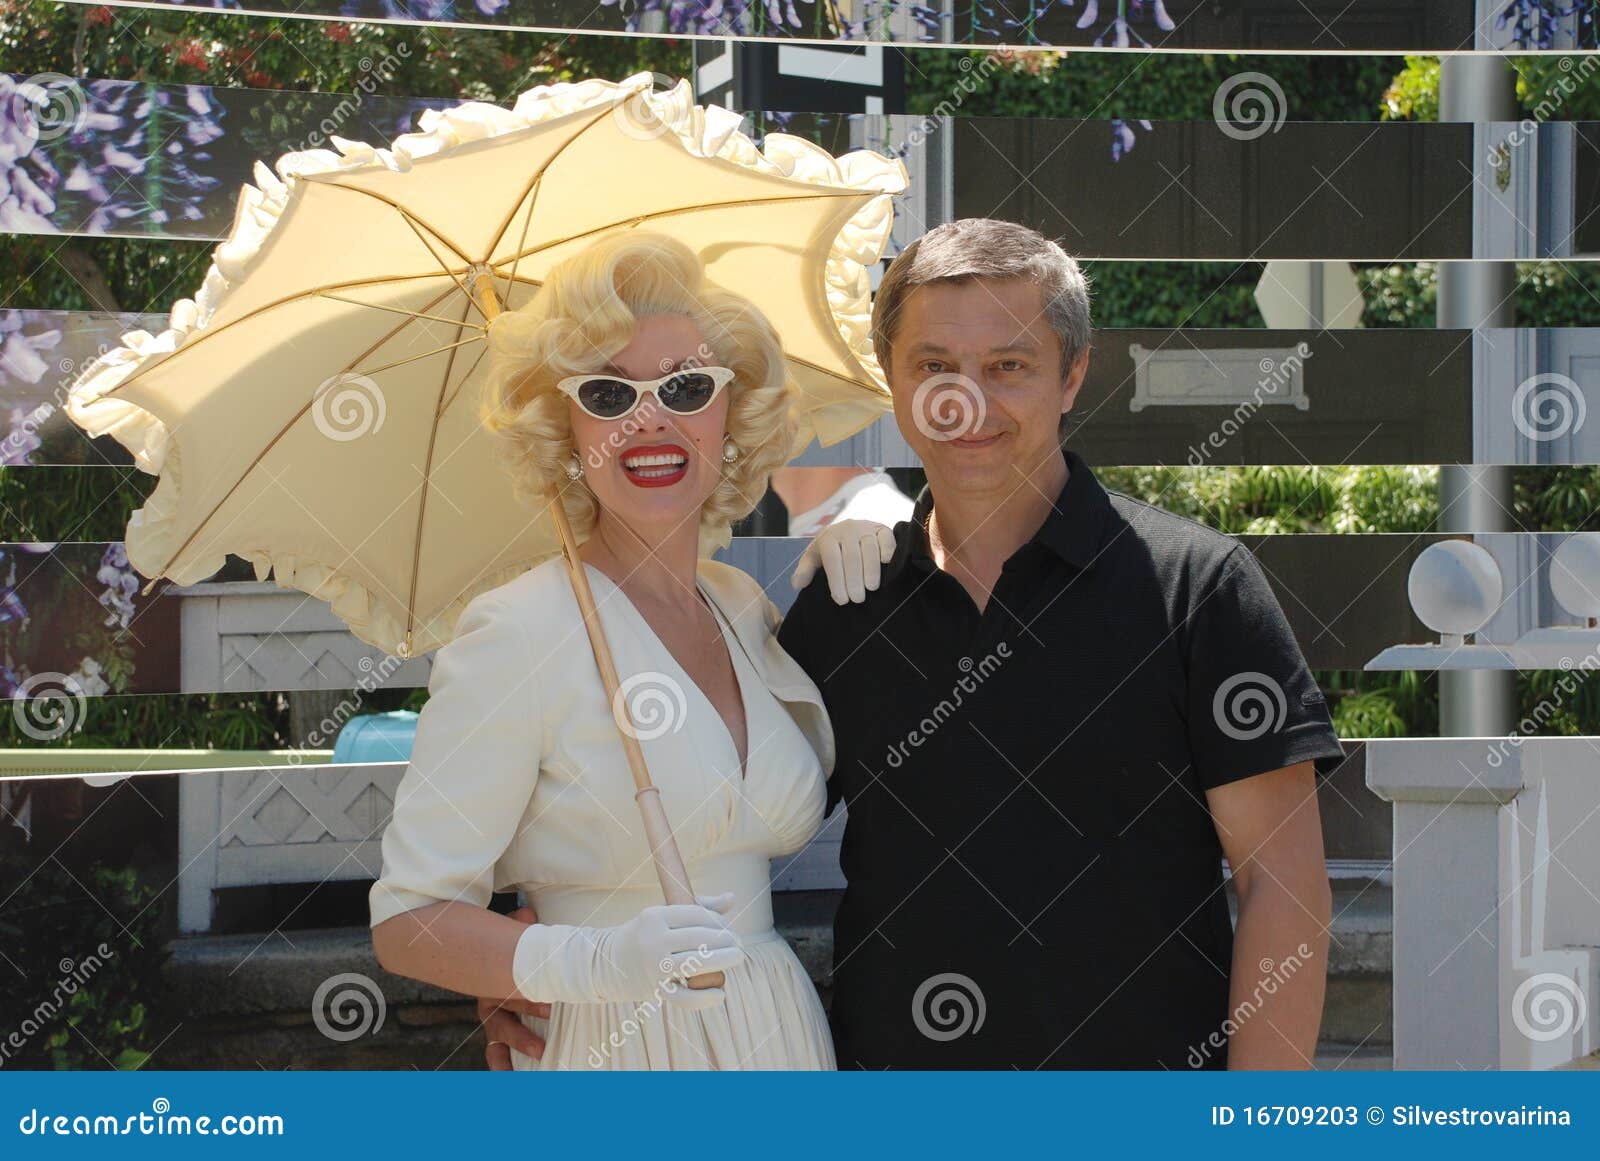 Gevoelig bekennen Vrijgevig Marilyn Monroe with a Man in Universal Studios Editorial Stock Photo -  Image of city, excitement: 16709203